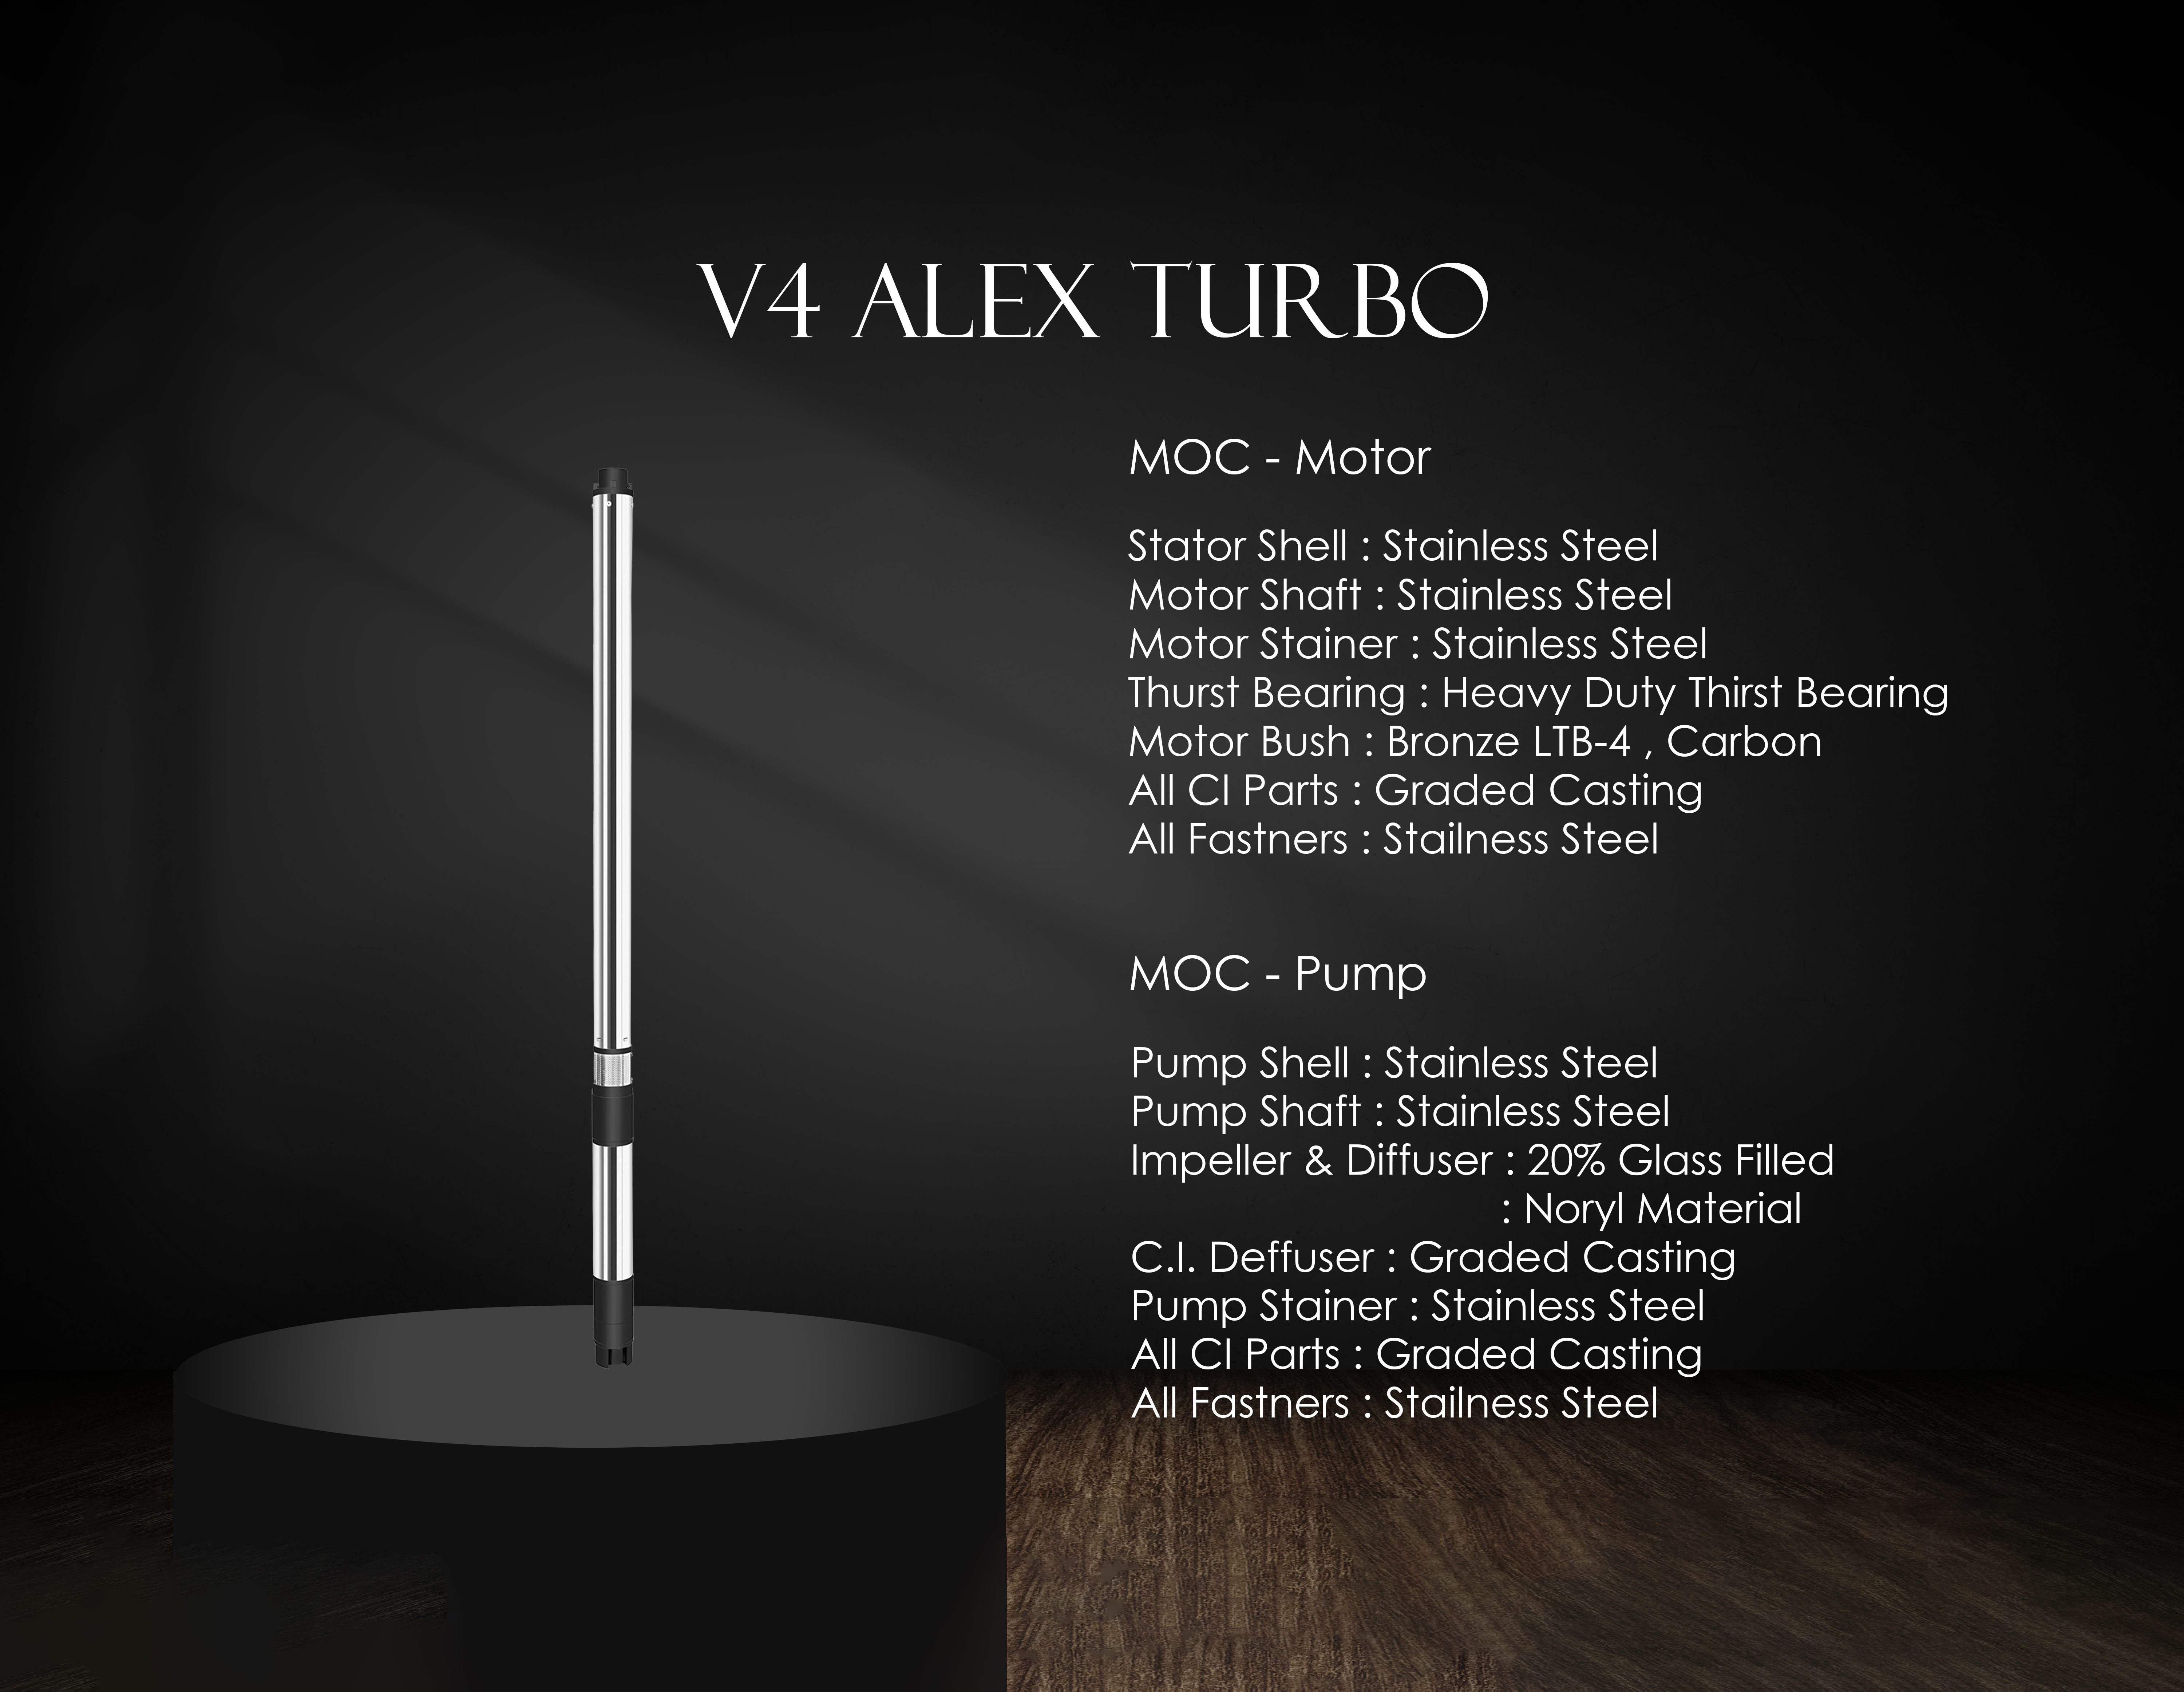 V4 3.0 HP X 30 STG Alex Turbo (Out-1.25") (S/T) Prithvi